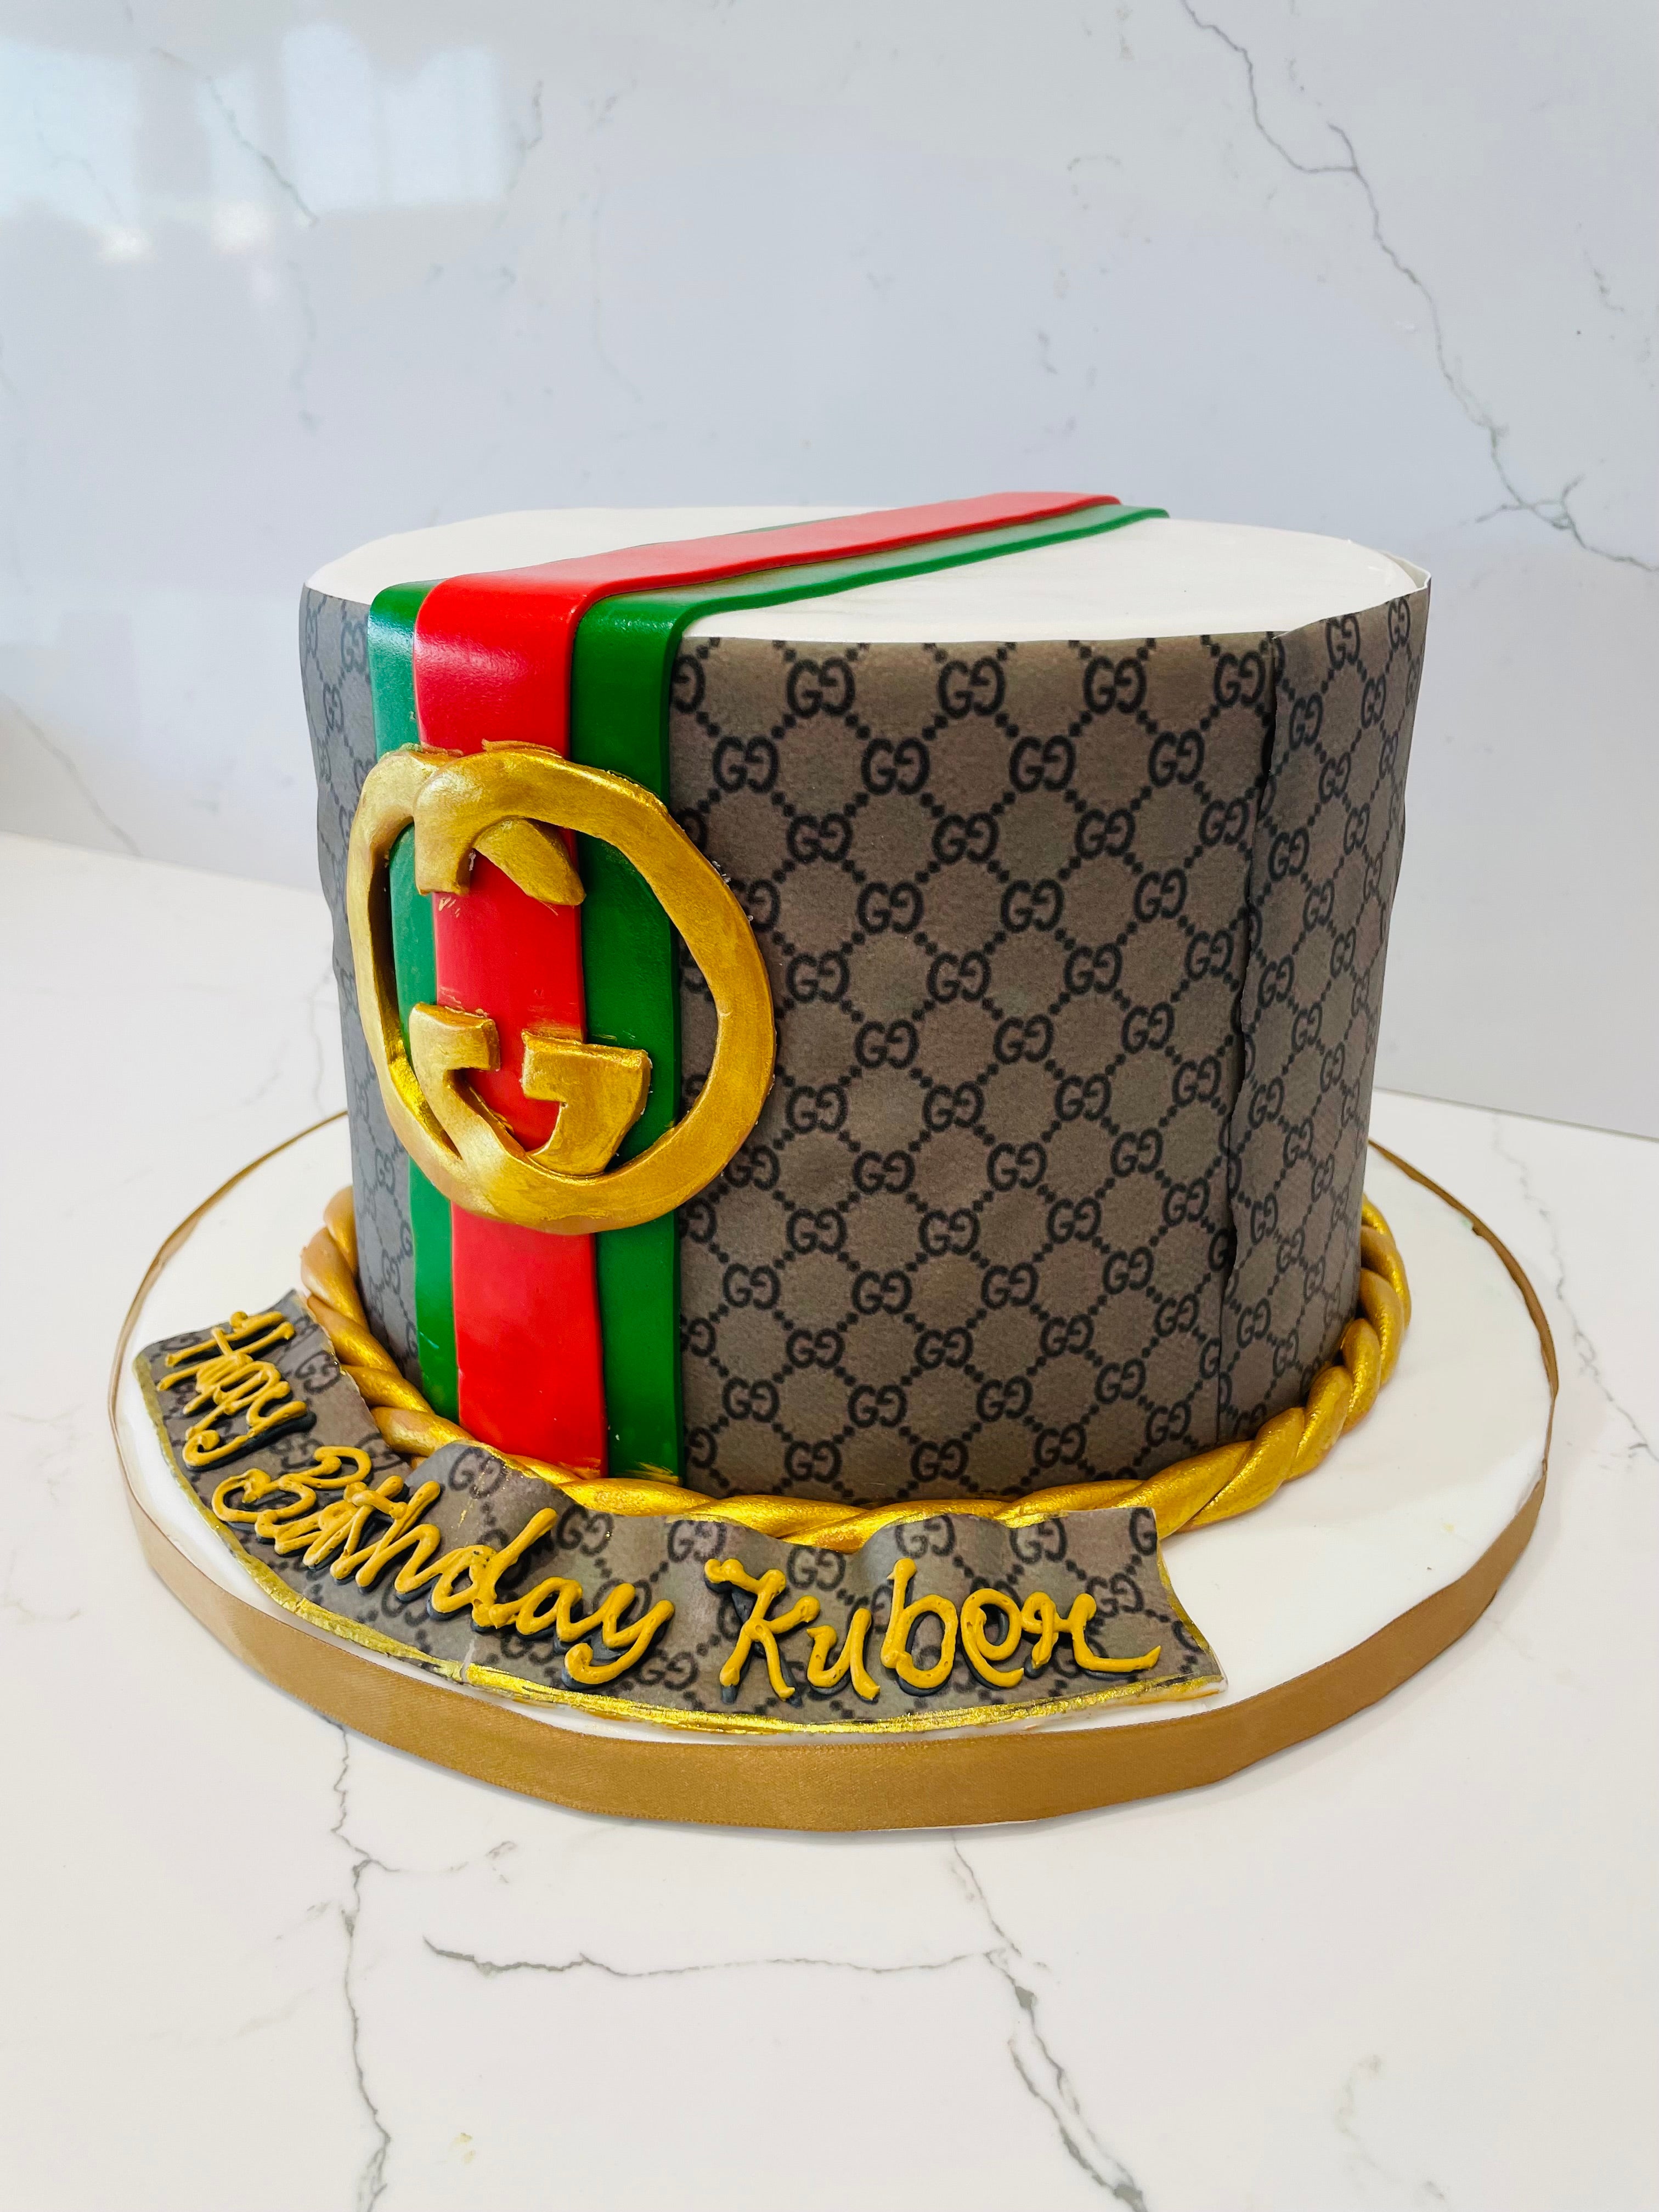 Gucci cake - Decorated Cake by Jitkap - CakesDecor